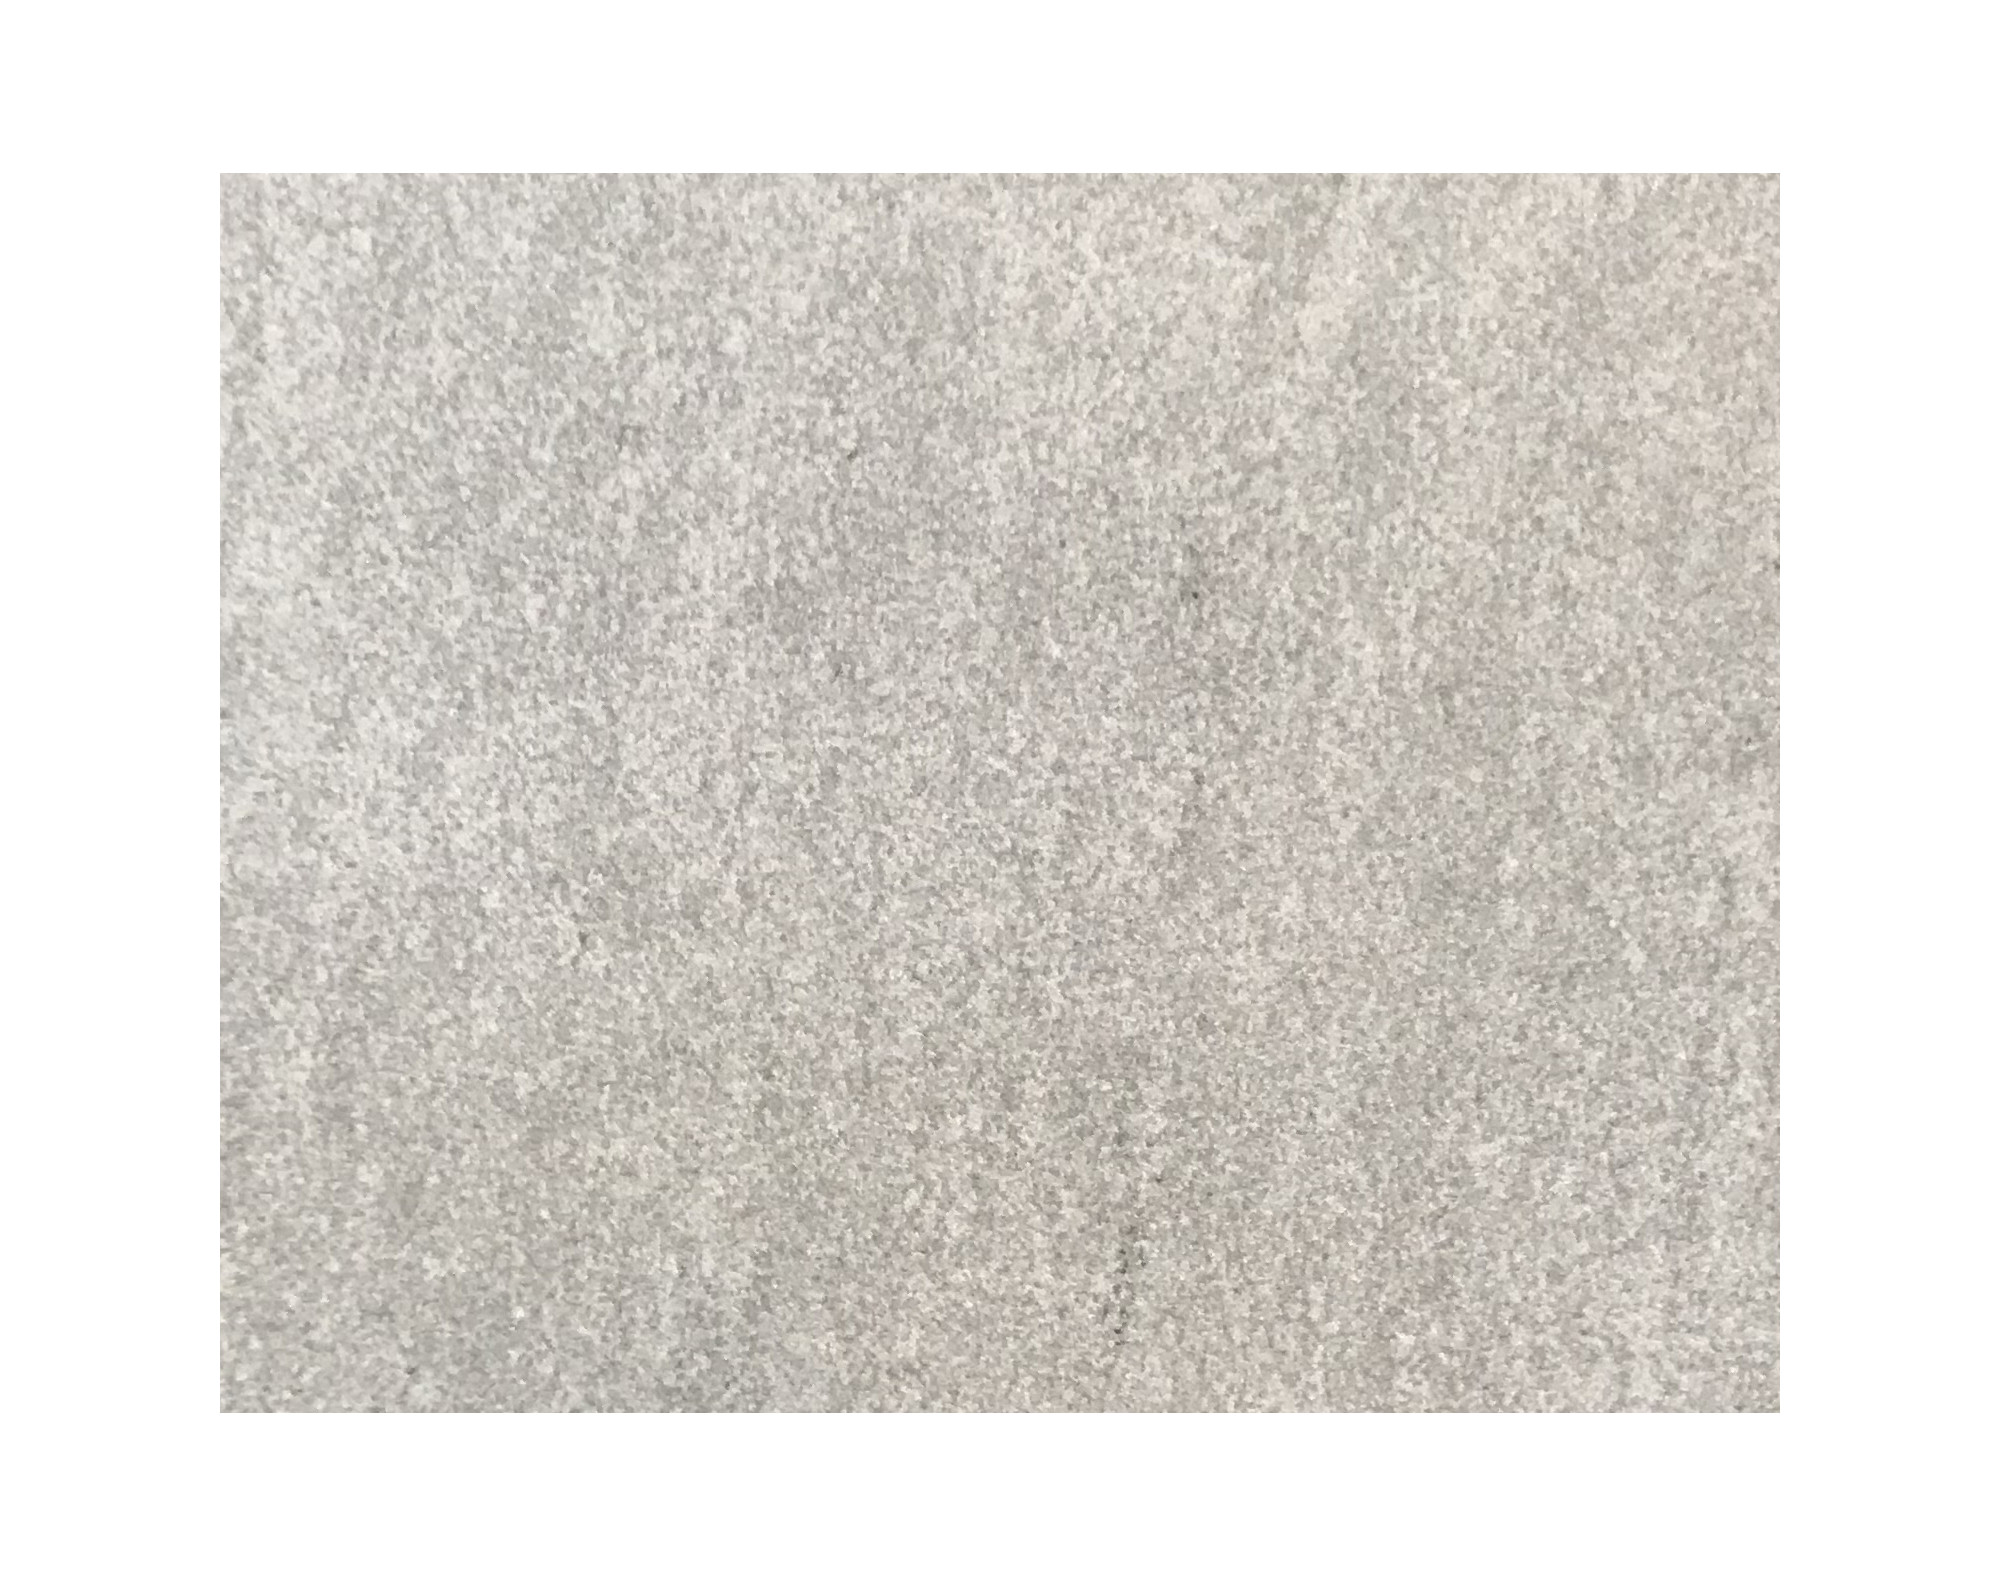 Harmo roc firenzeset, keramiek-serie, 8-vormig d:4,60mx7,25m, zand grijs, keramisch porselein